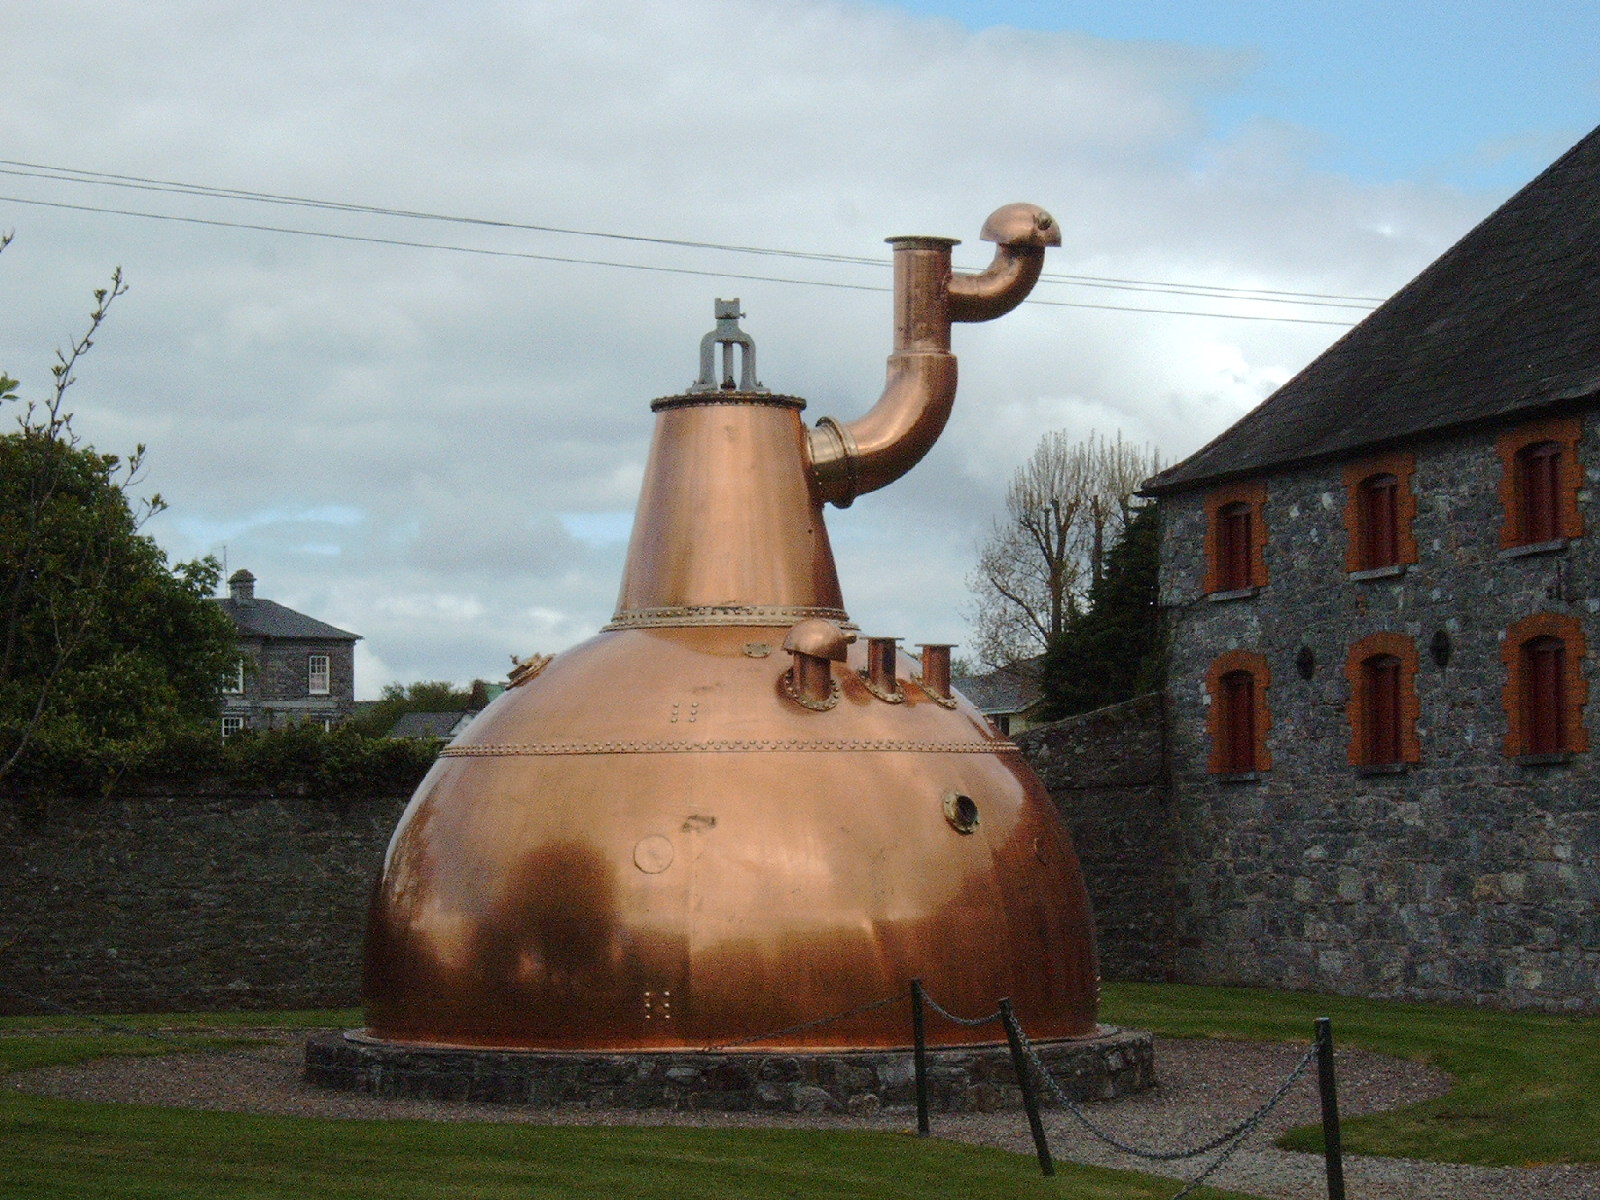 Jameson/Irland
Bild: The Whisky Man